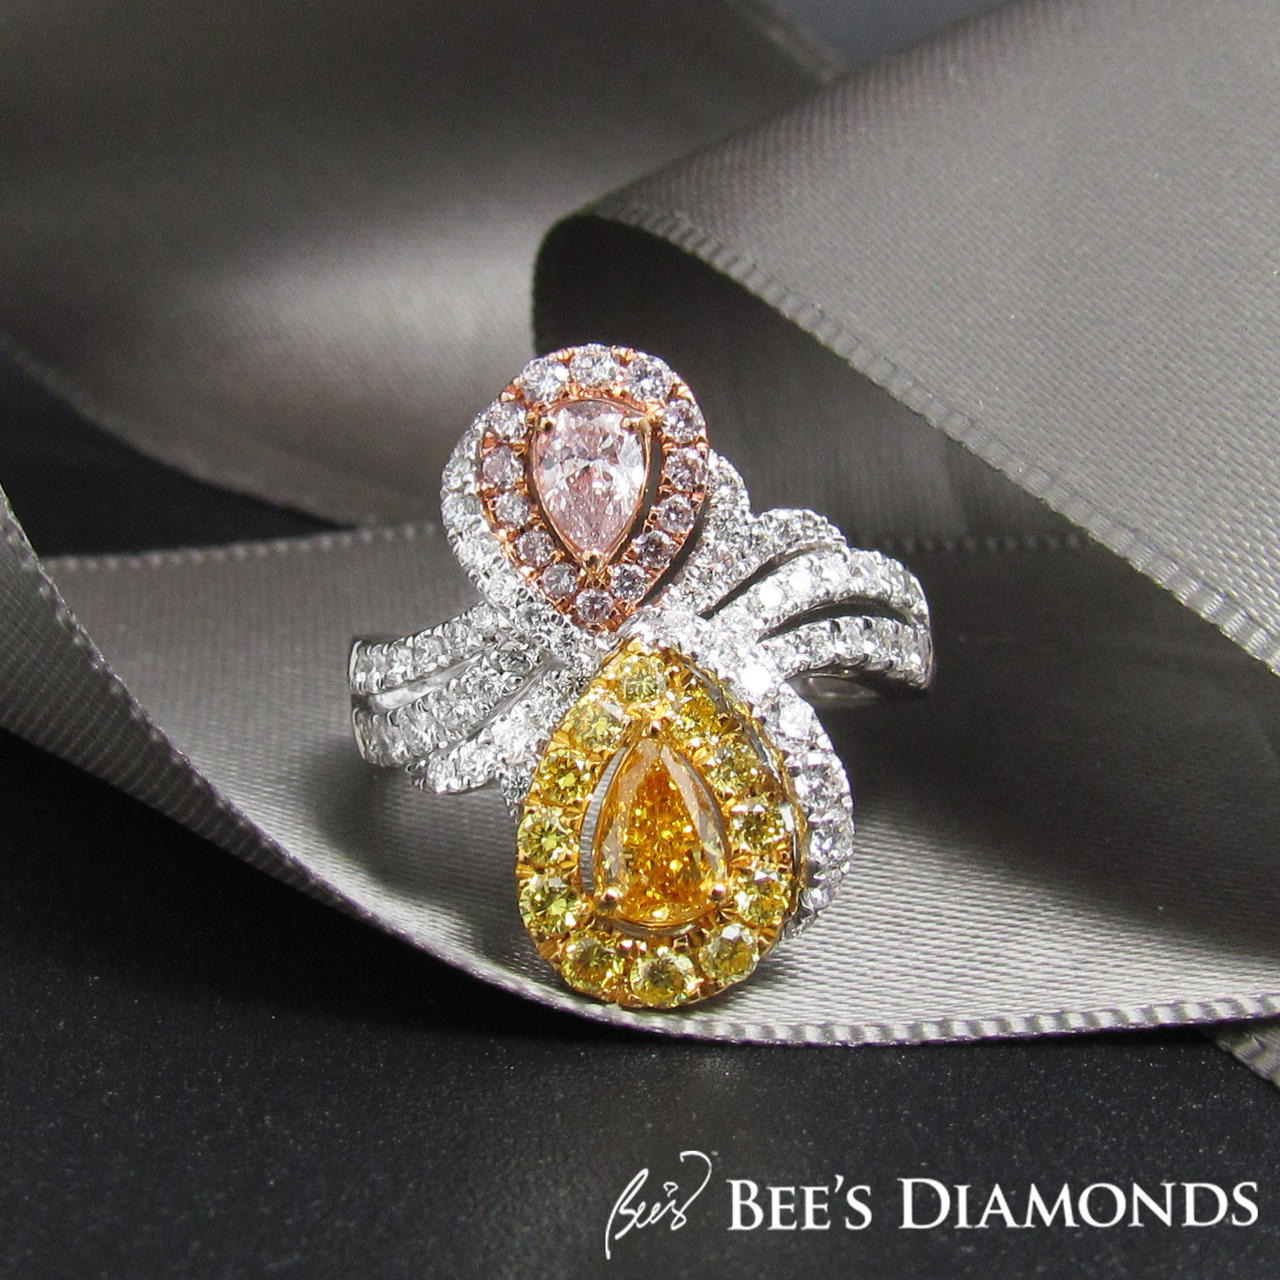 Pink and yellow pear shaped diamond rings | Bee's Diamonds